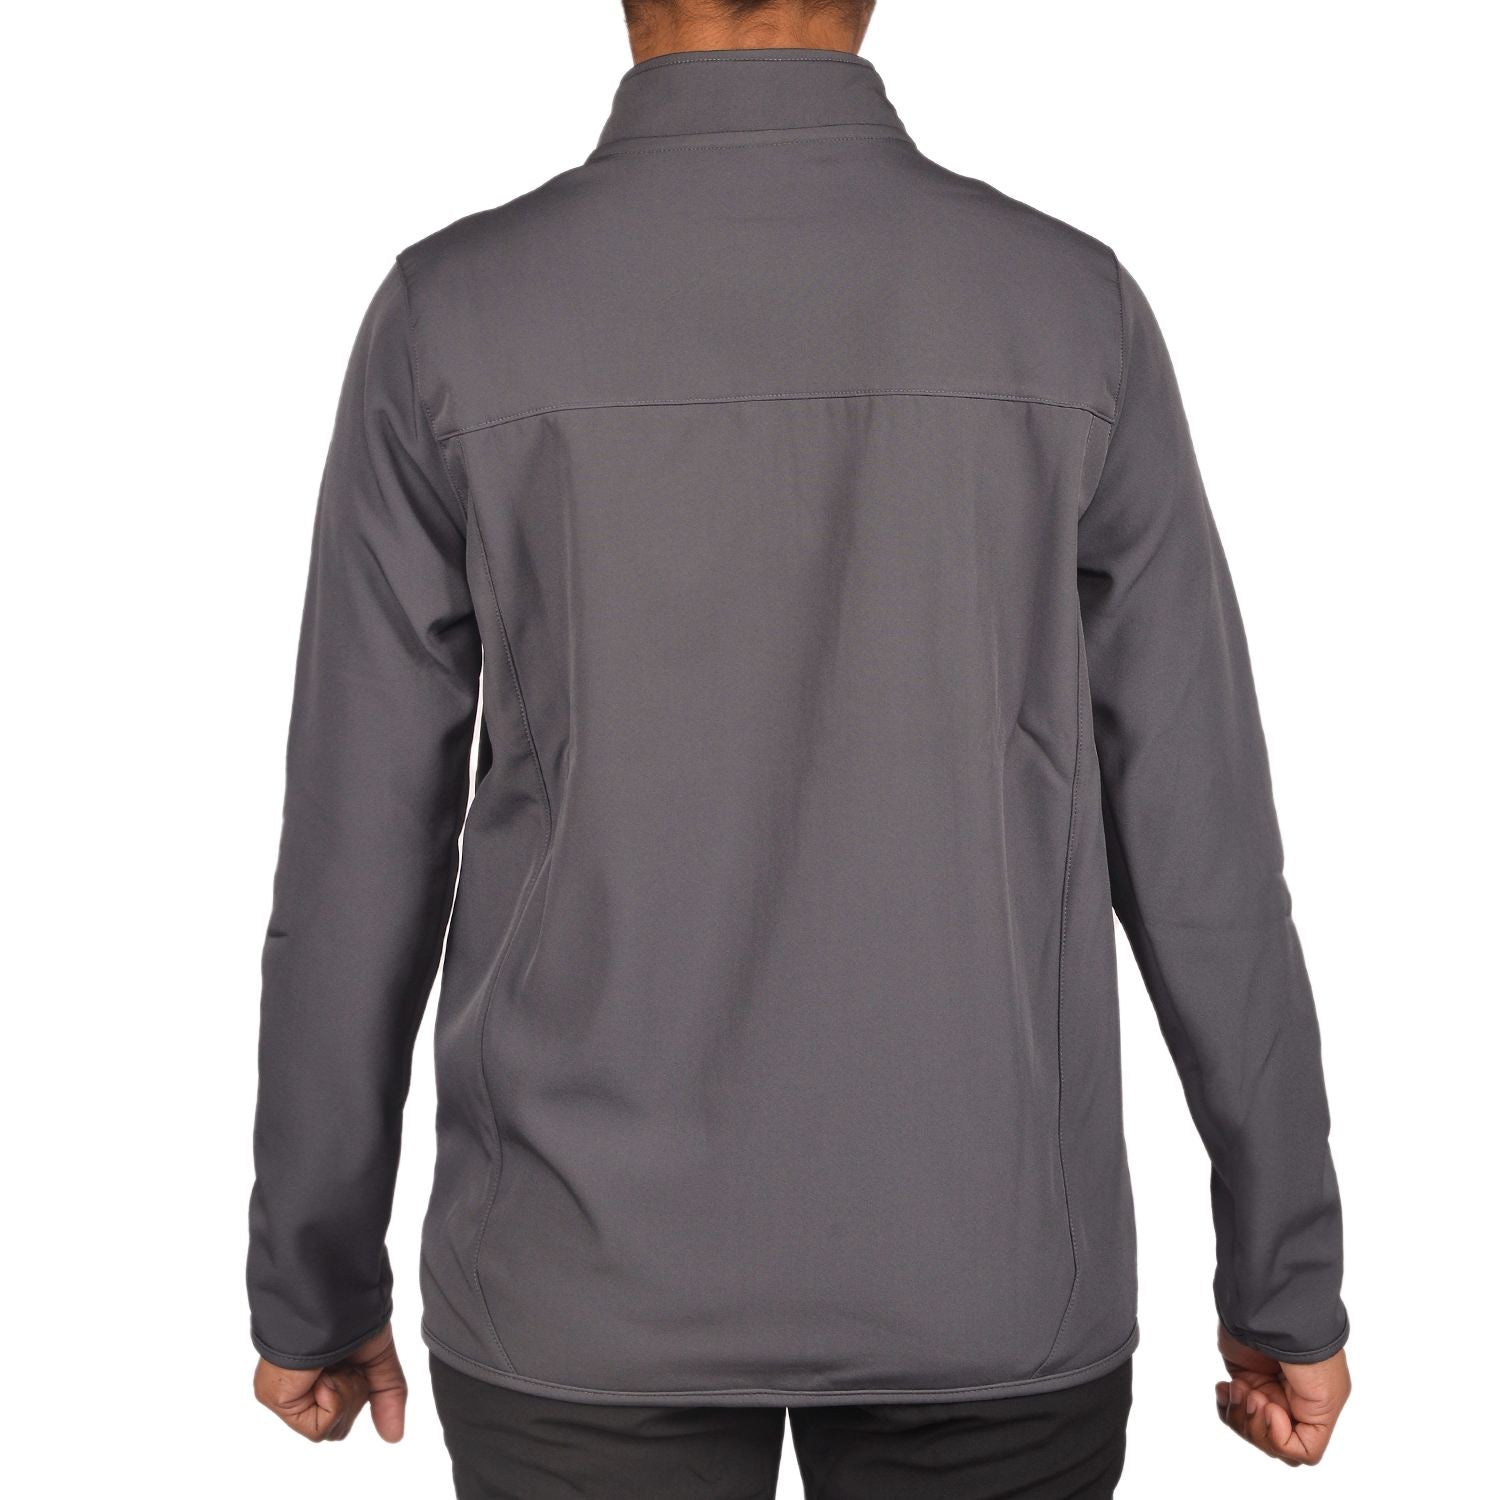 Buy Gokyo Kaza Soft Shell Insulated Fleece Jacket - Women | Jackets at Gokyo Outdoor Clothing & Gear